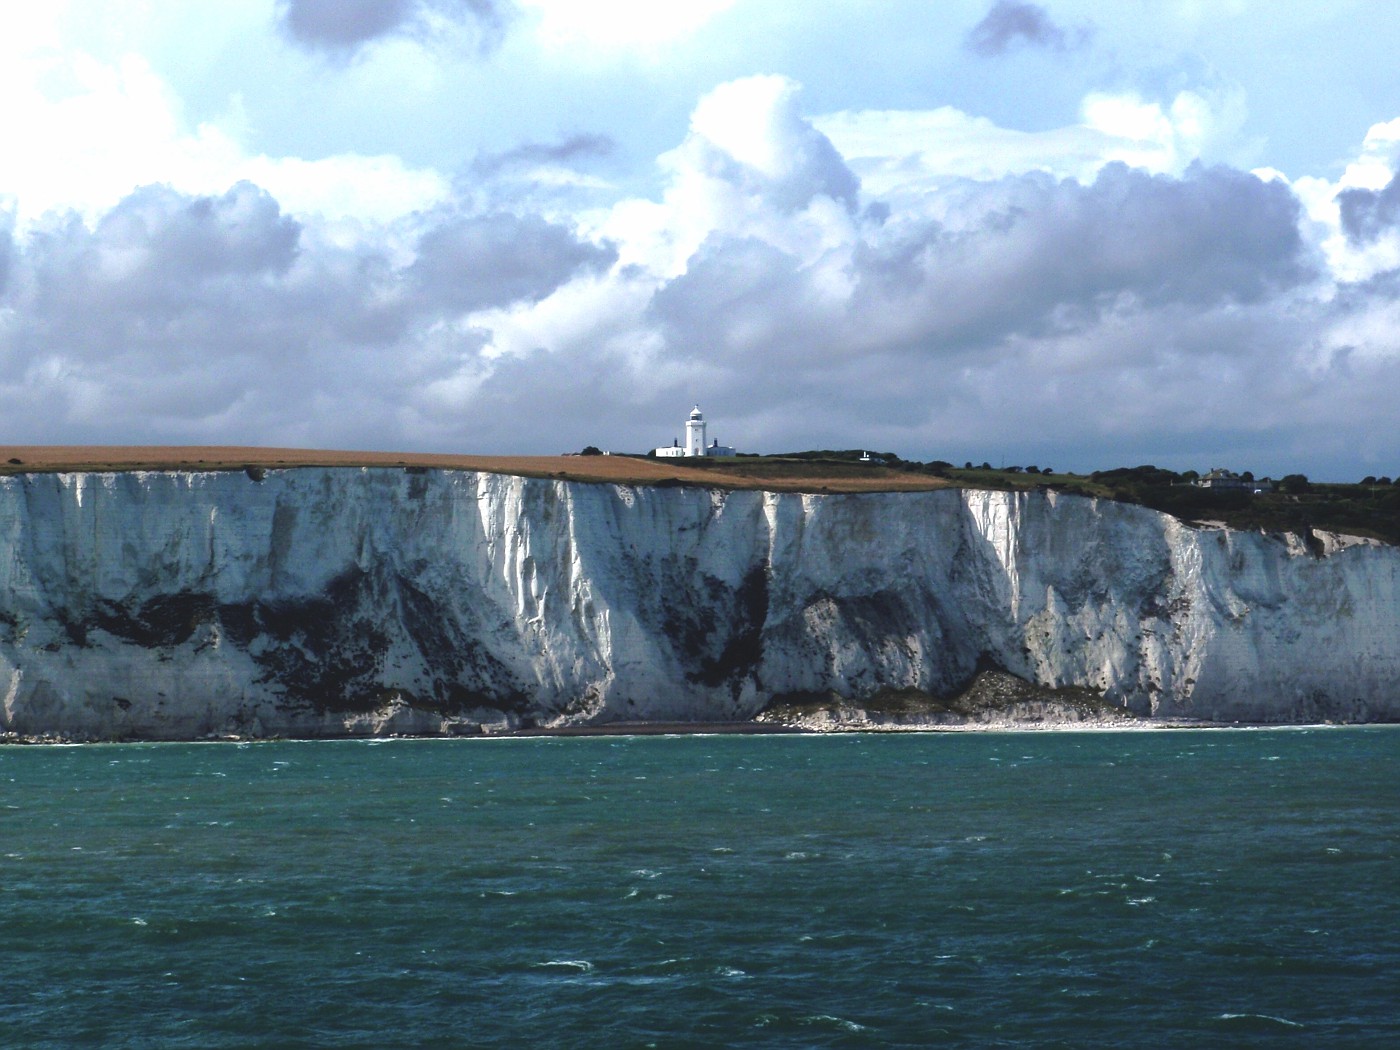 The coast of Dover